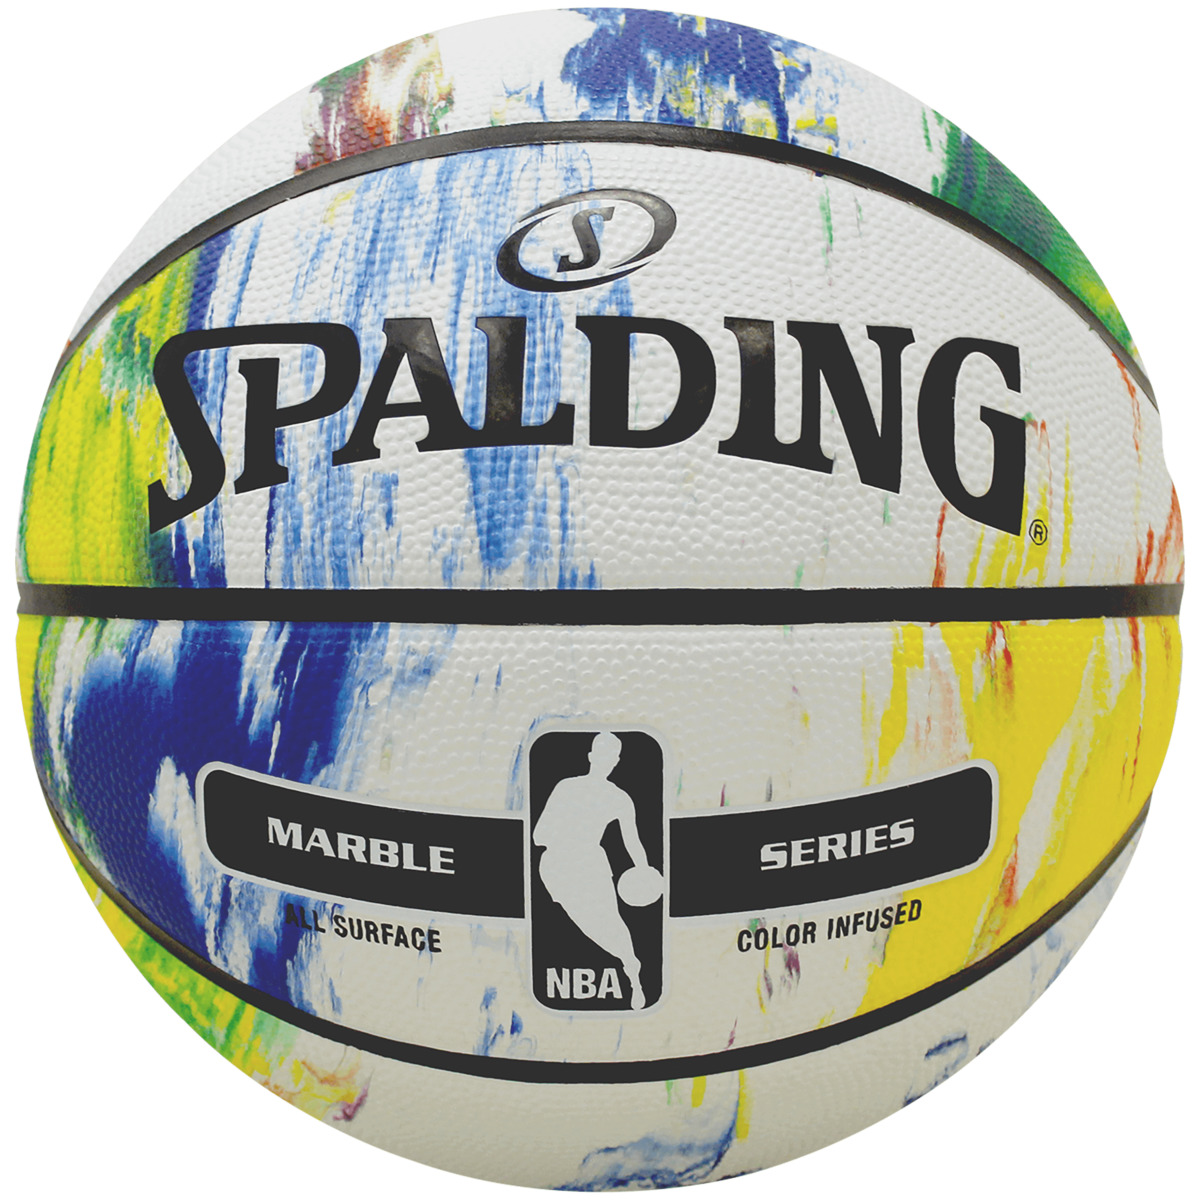 Spalding Basketball NBA Marble Size 7